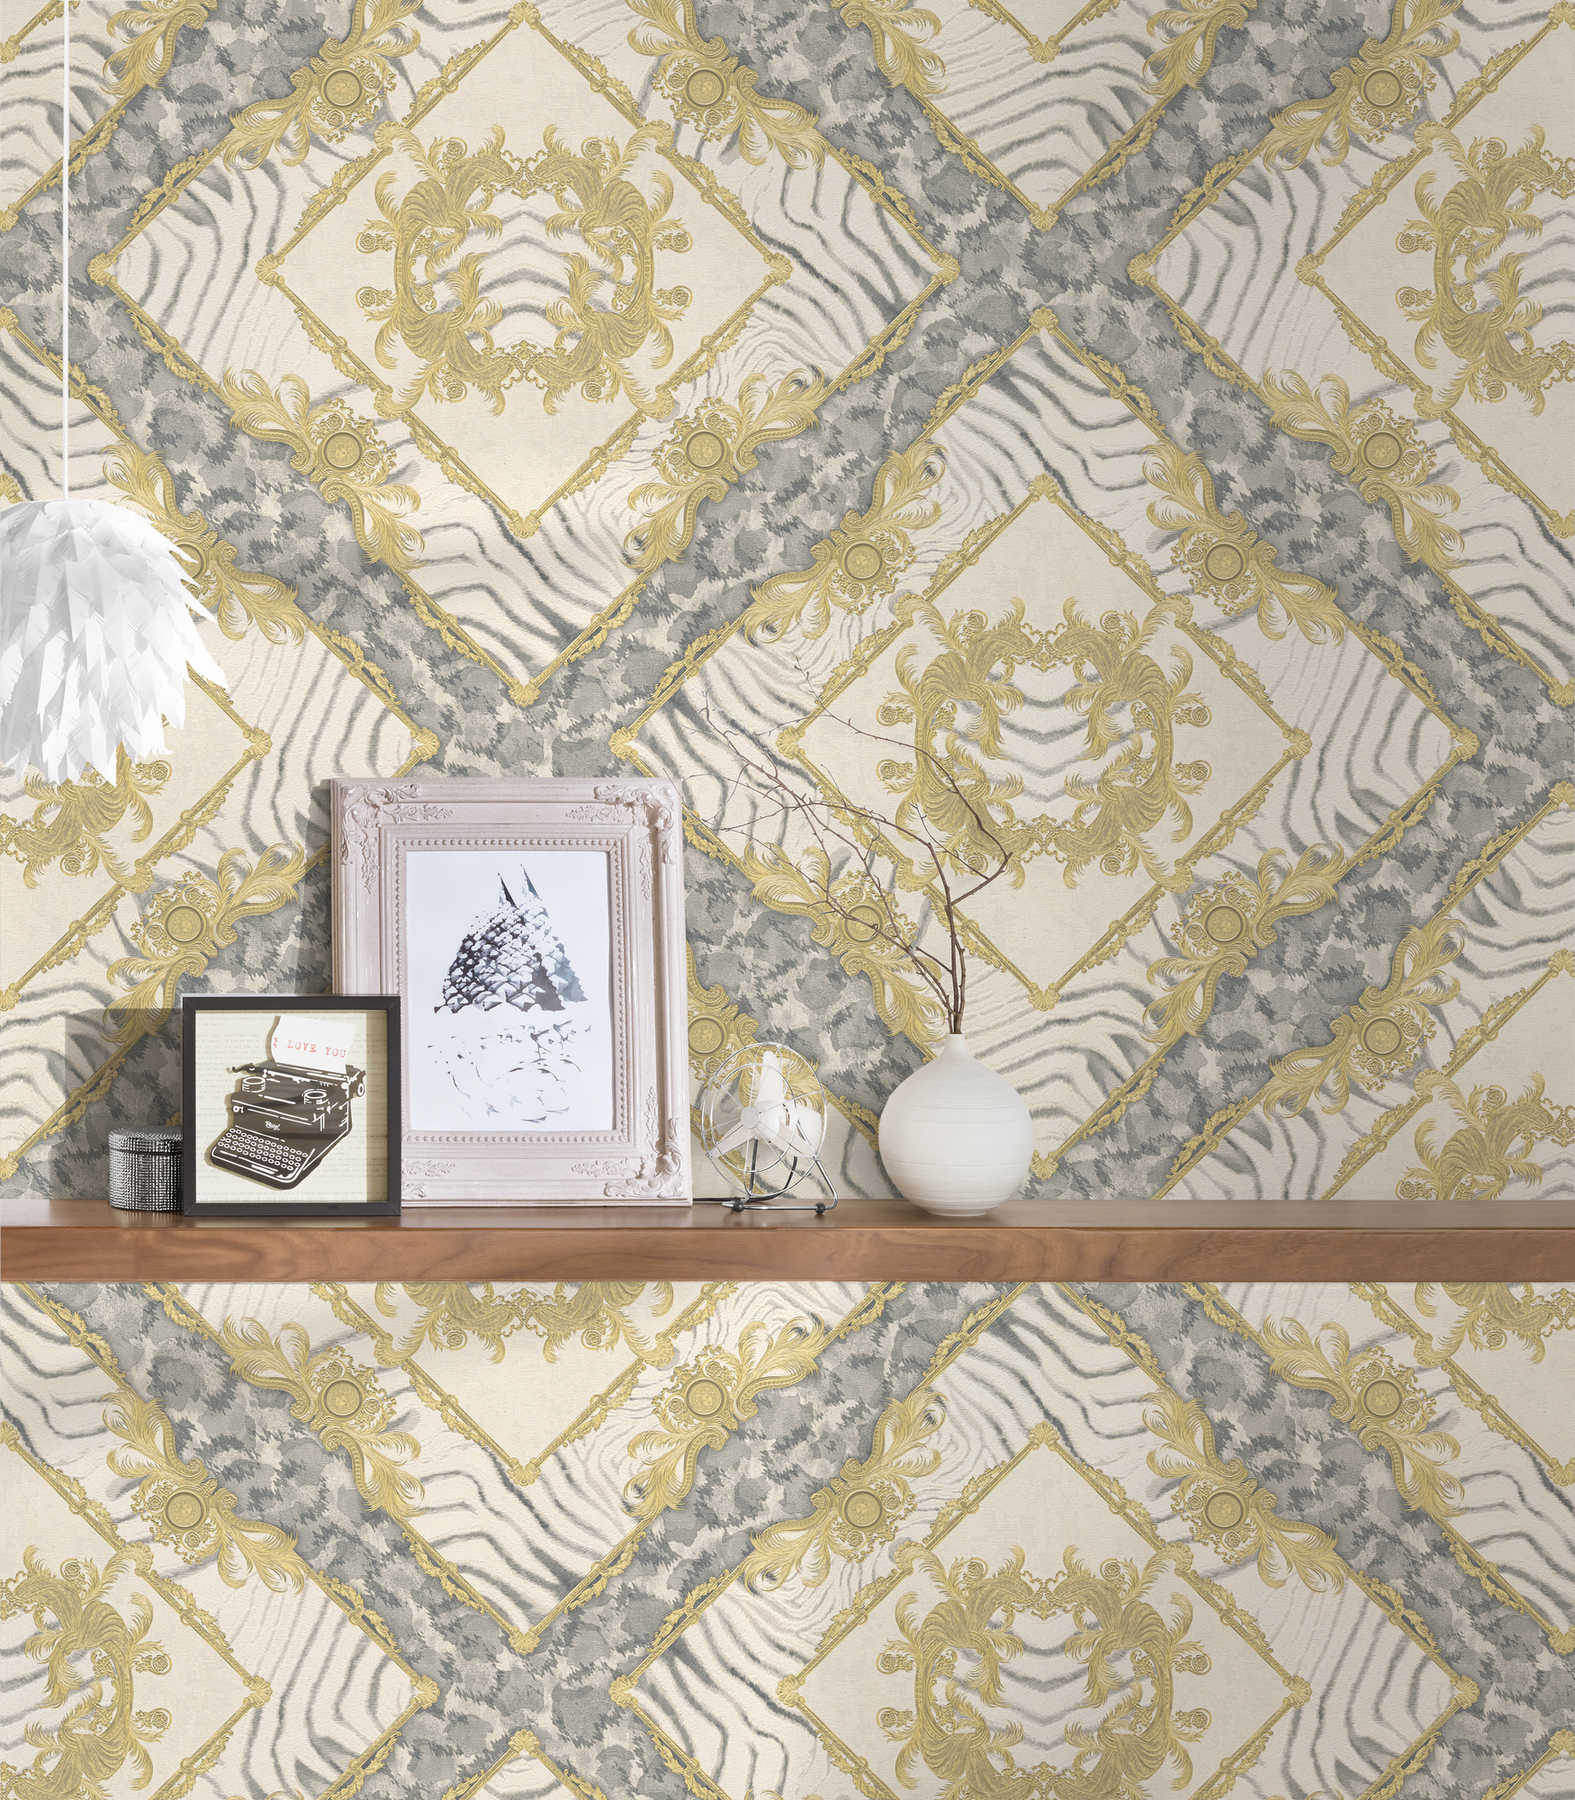             VERSACE wallpaper gold decor & animal print - cream, metallic
        